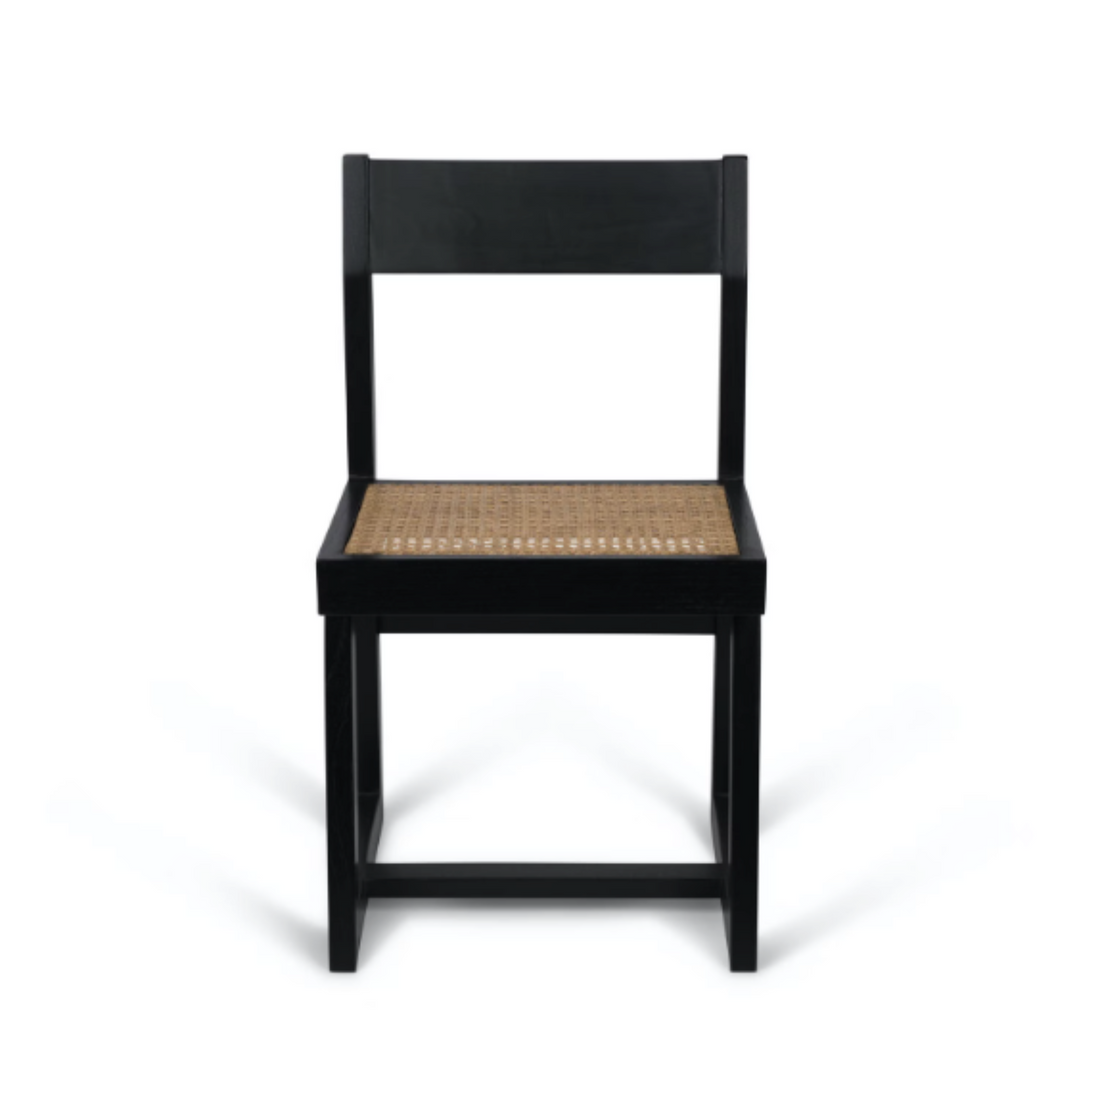 Box Chair - Charcoal Black (Warehouse Sale)